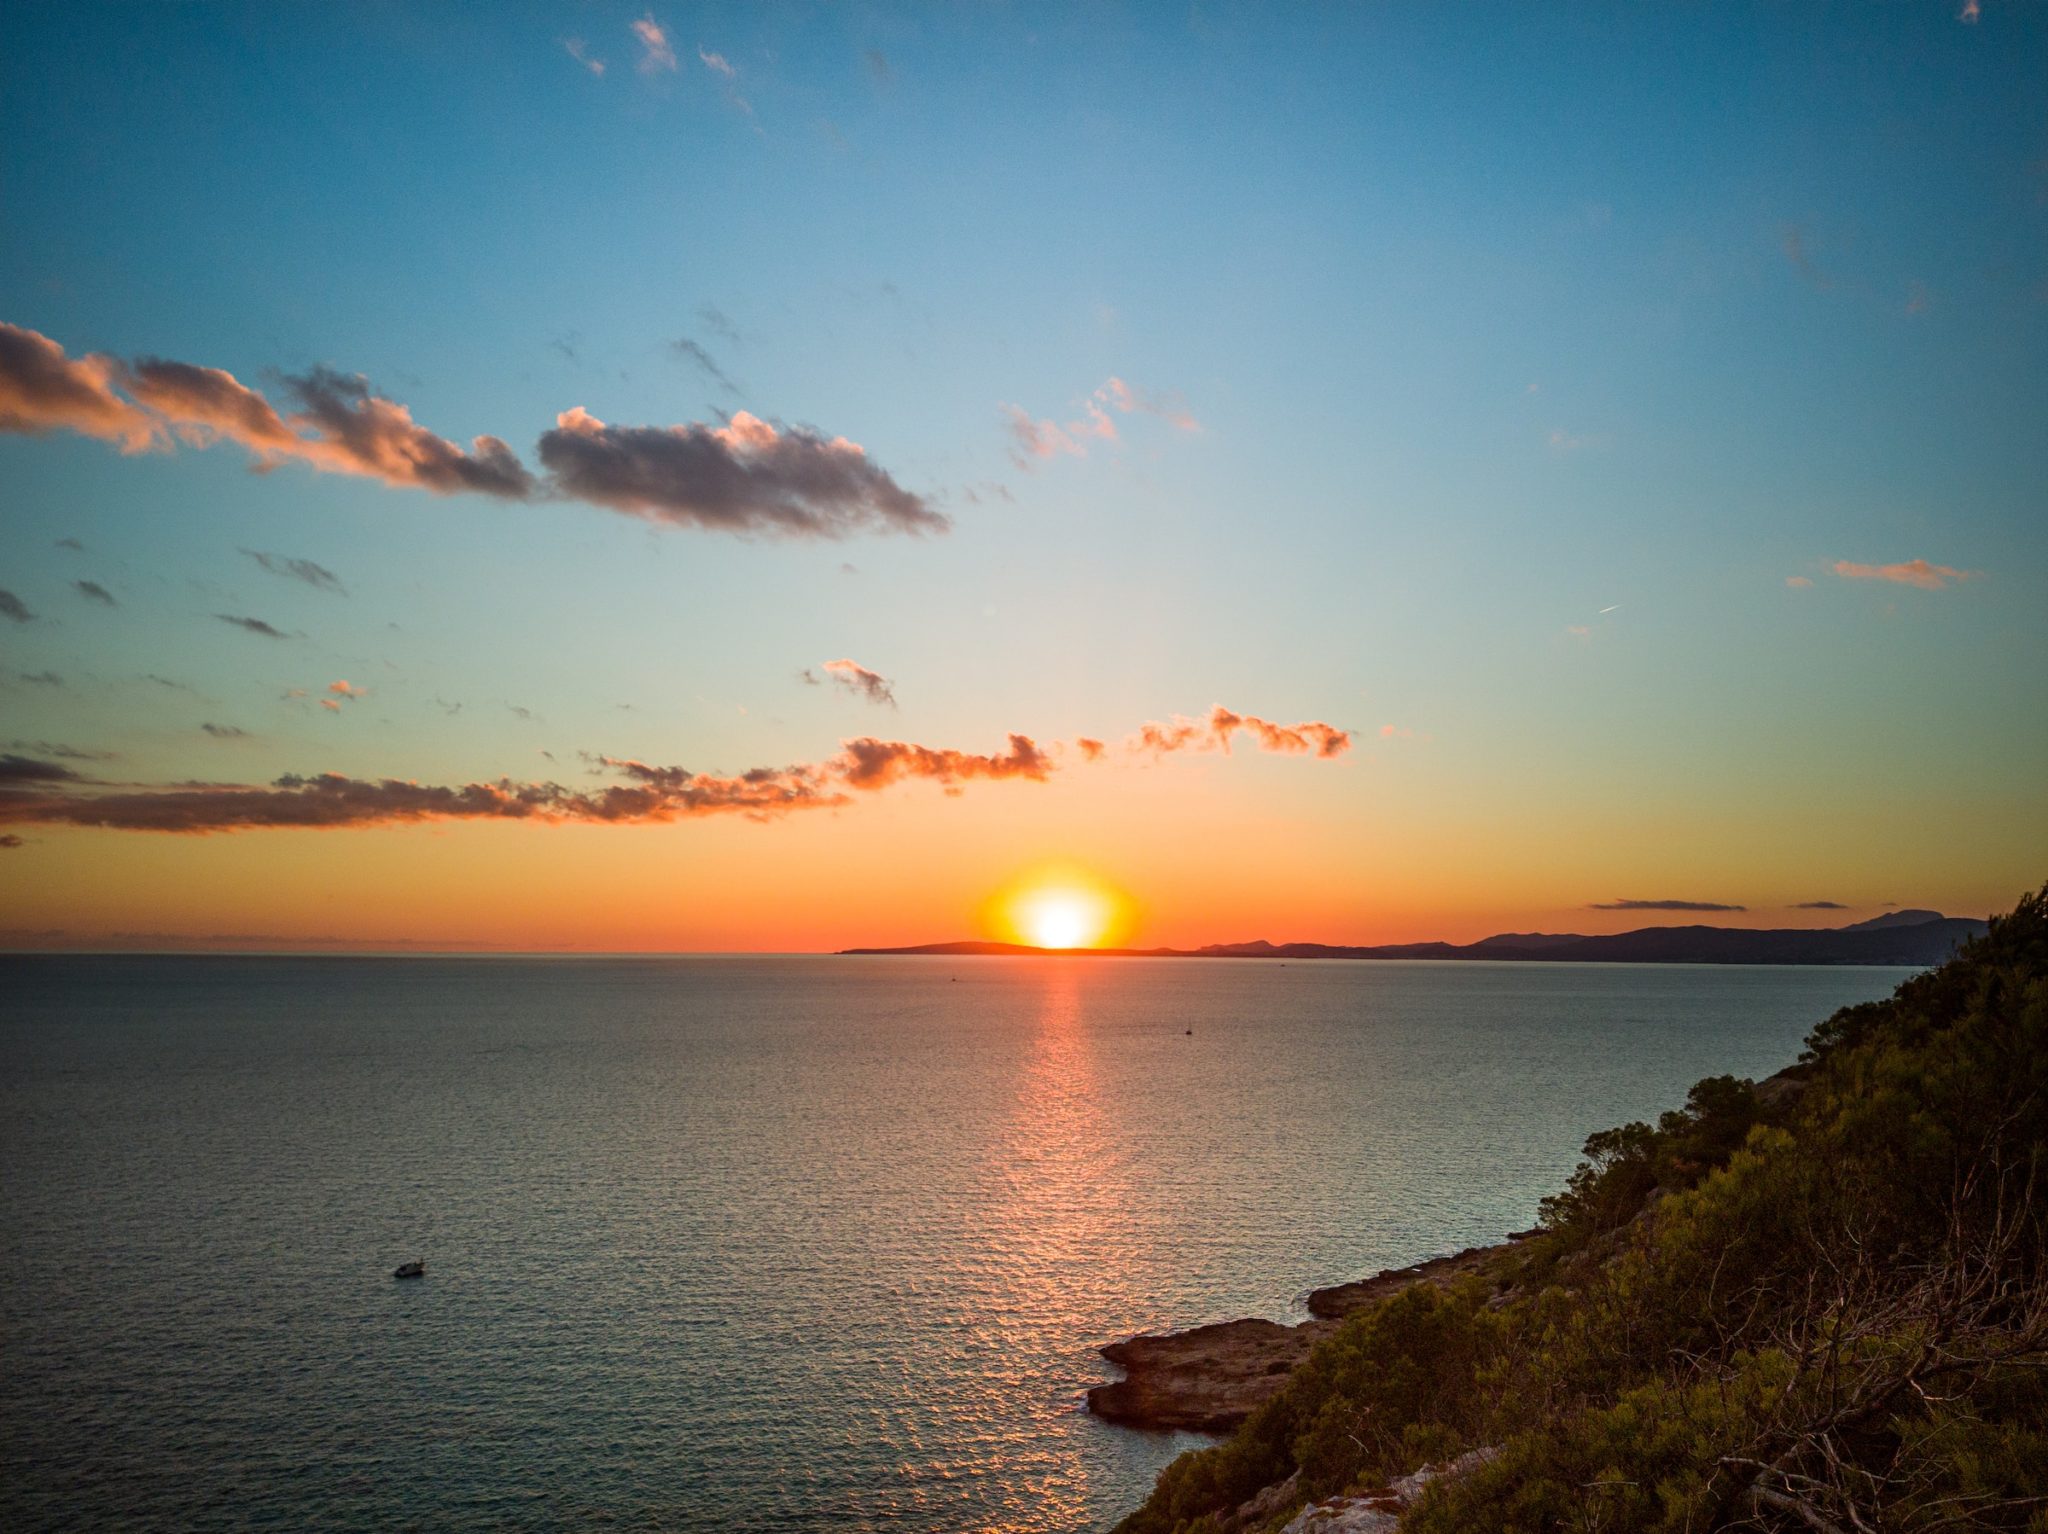 Sunset from Maioris coast, Llucmajor, Mallorca